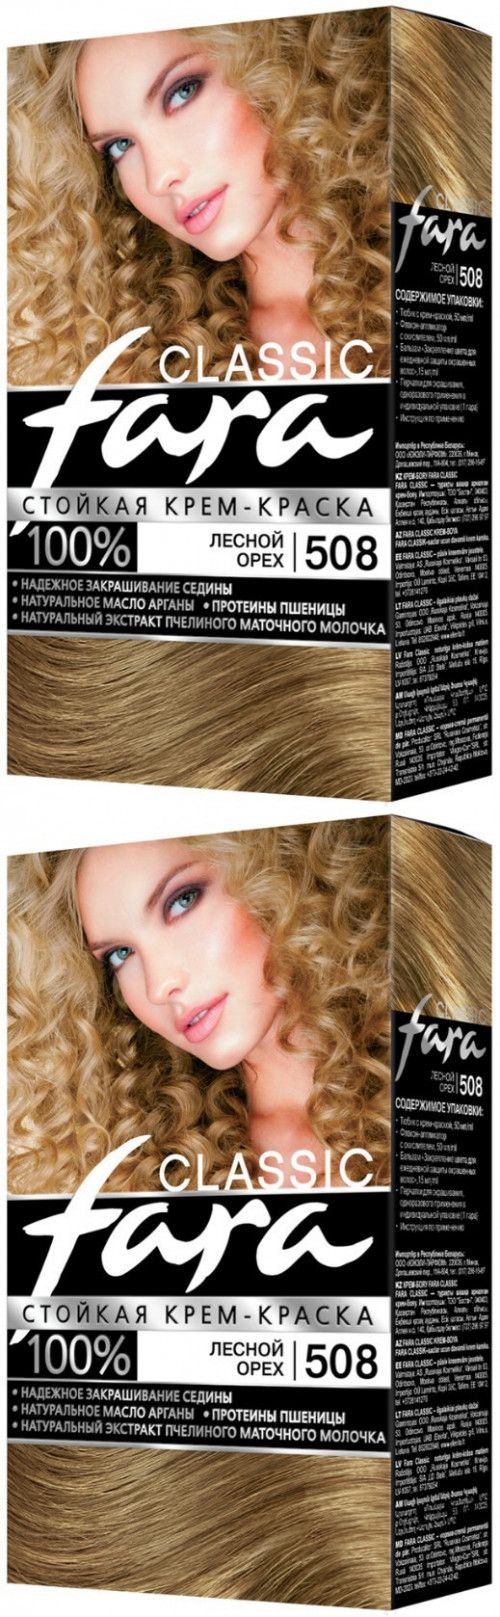 Краска для волос Fara Classic, тон 508, лесной орех, 2 шт.